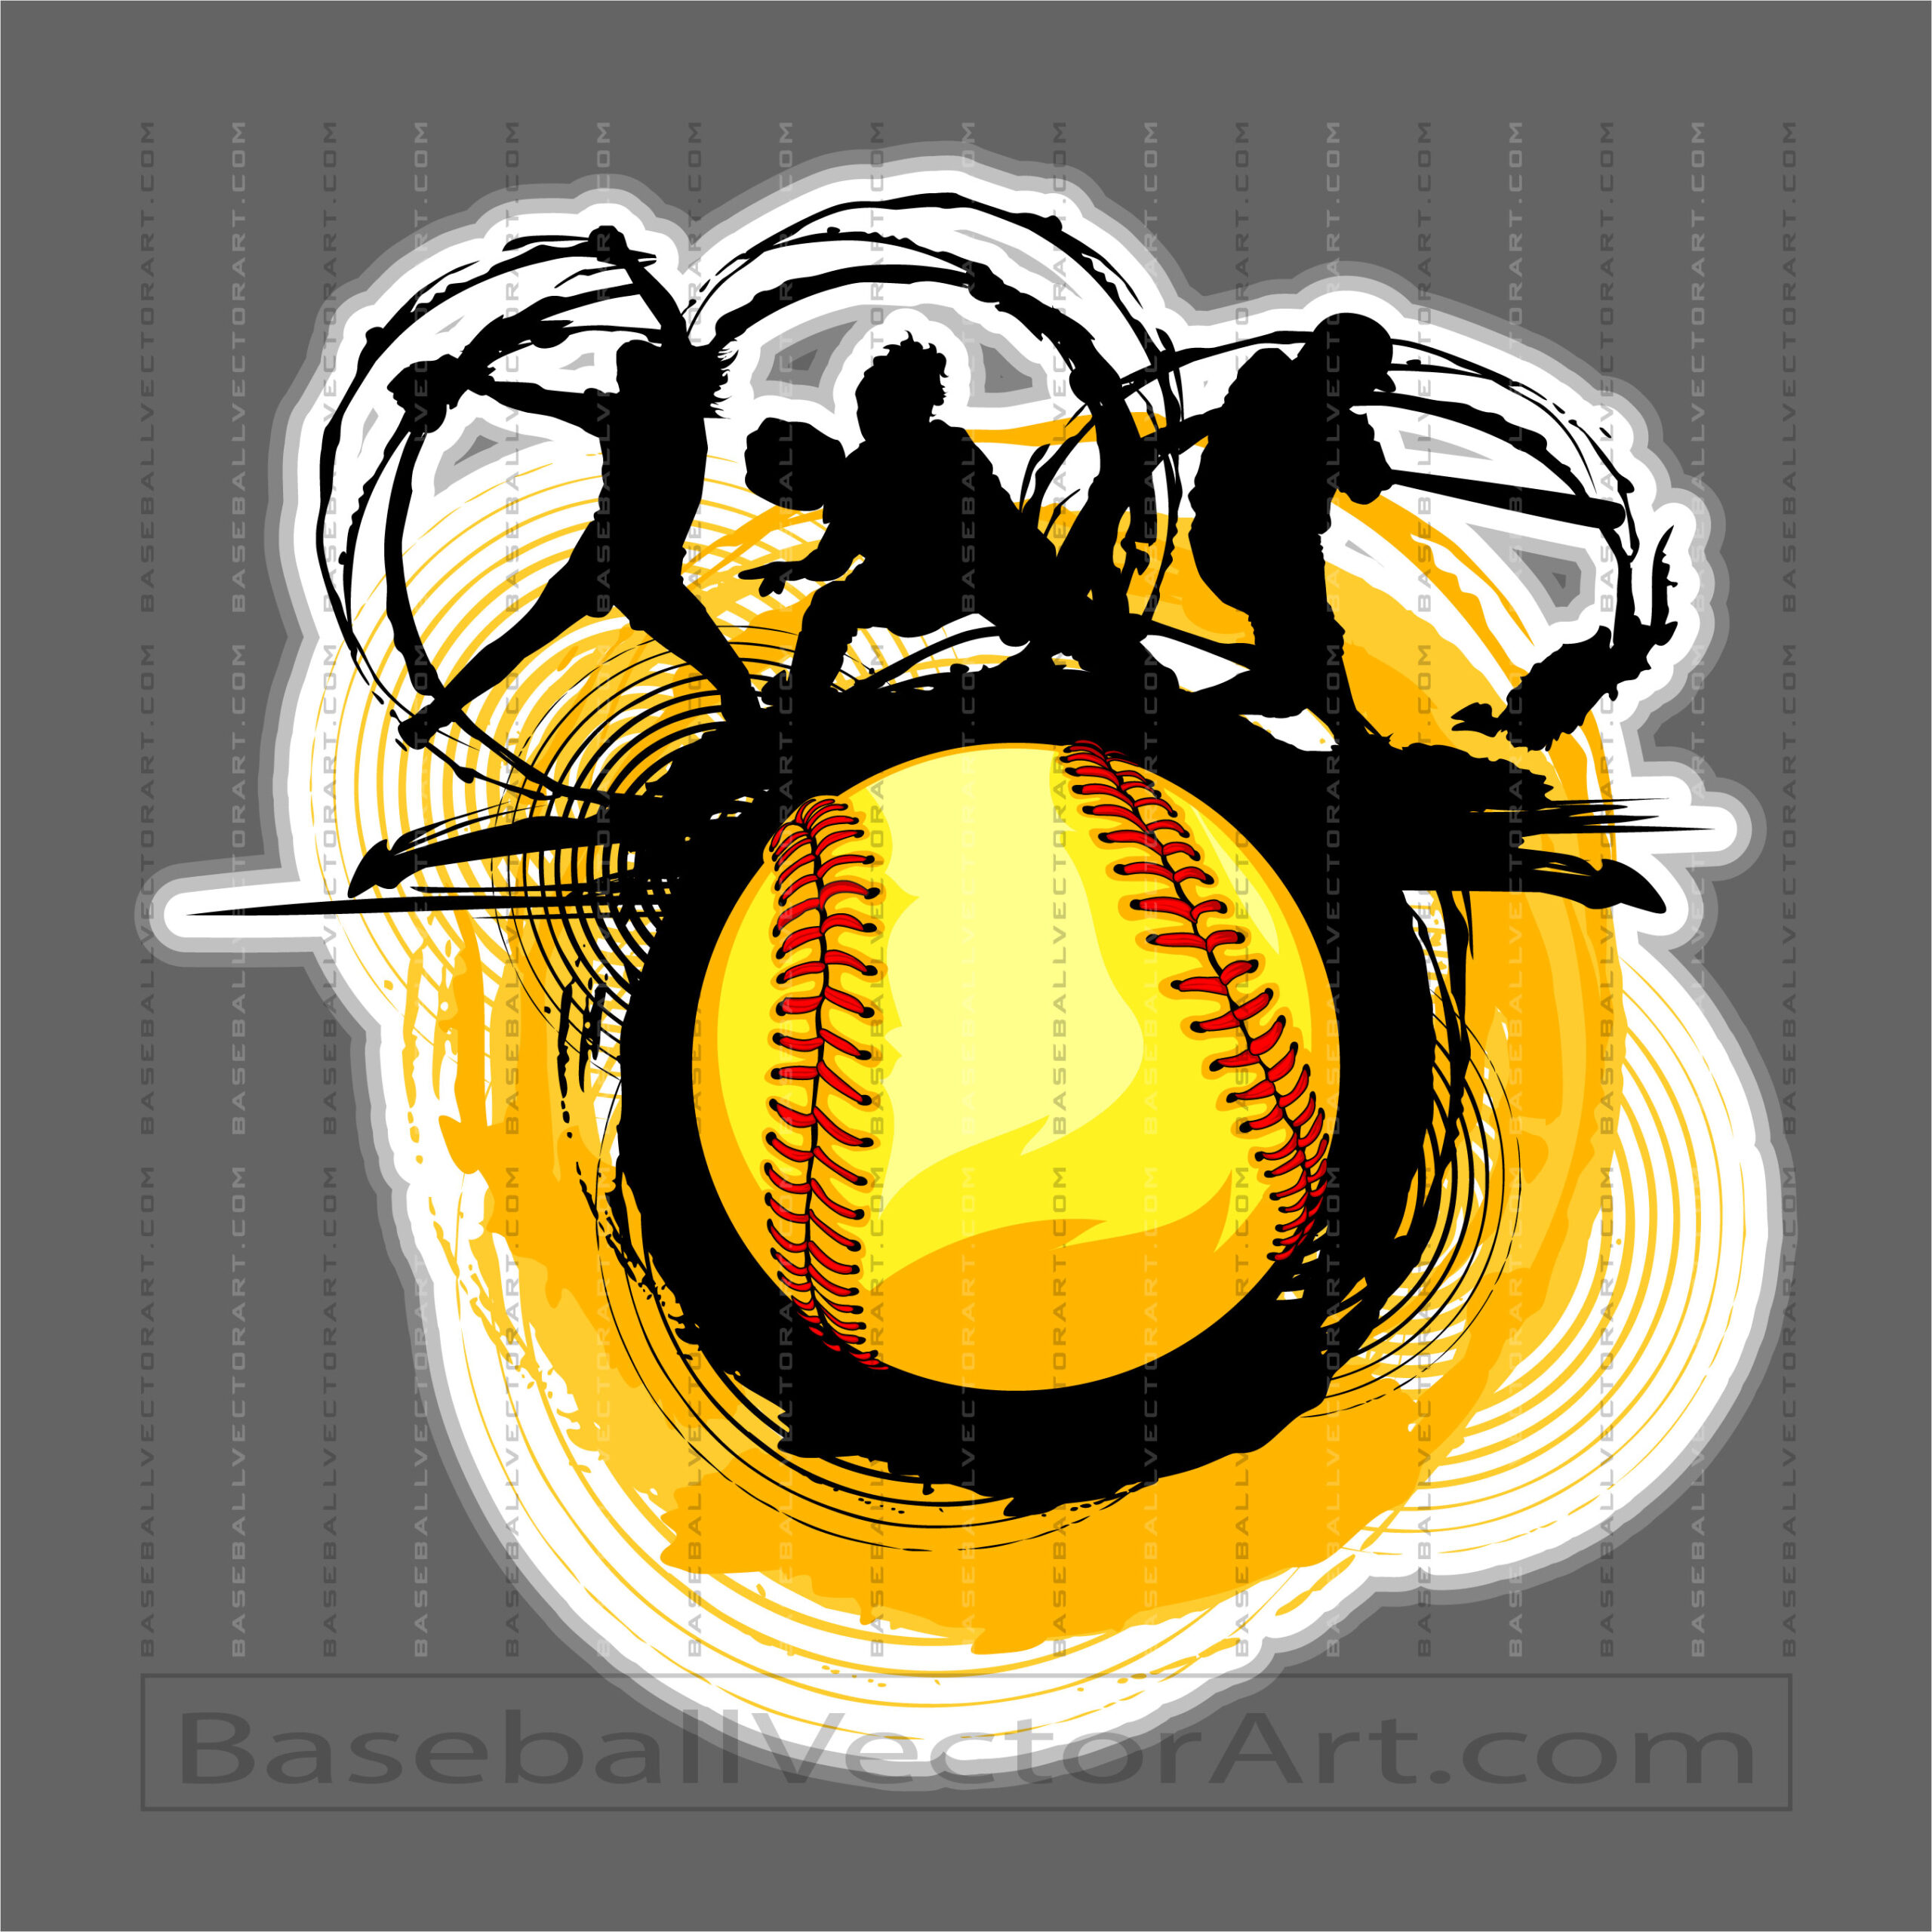 Softball Graphic